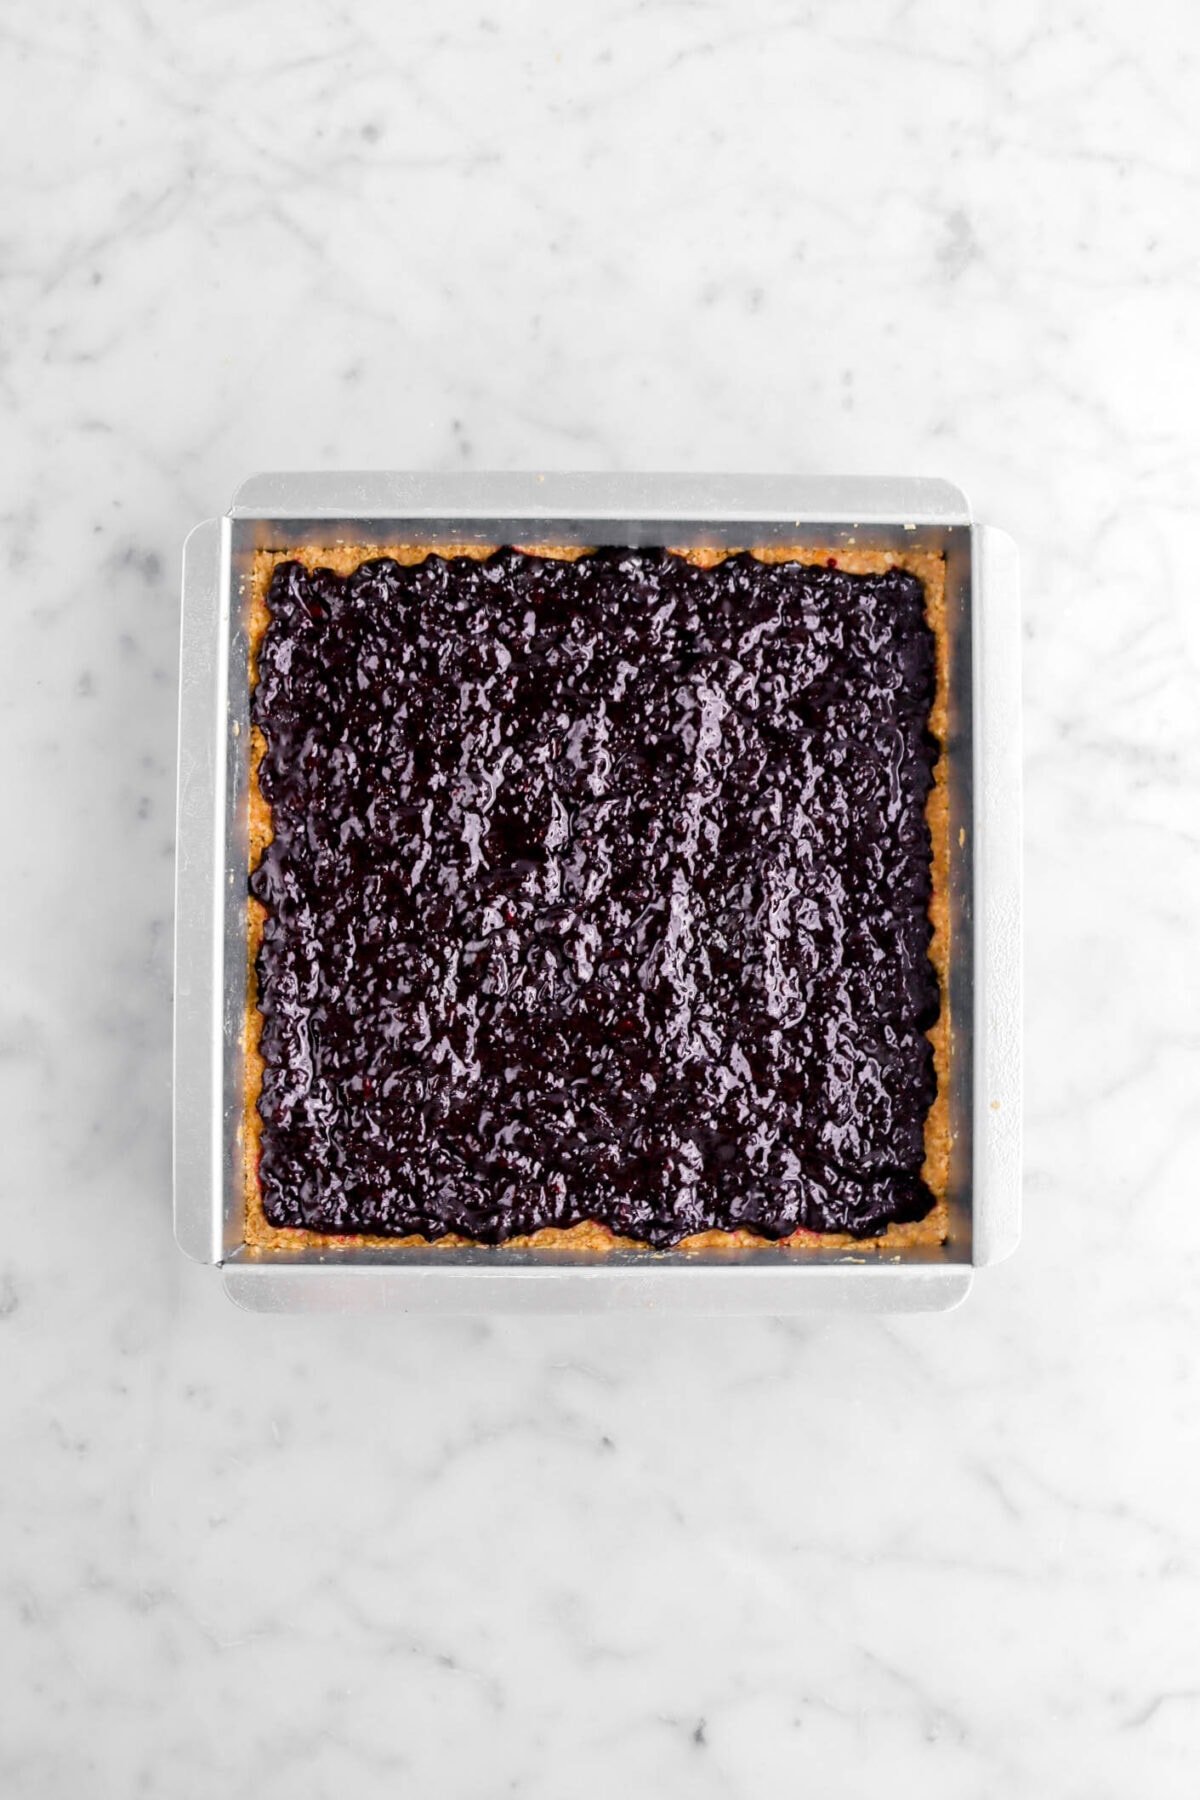 blueberry jam spread across par-baked crust.